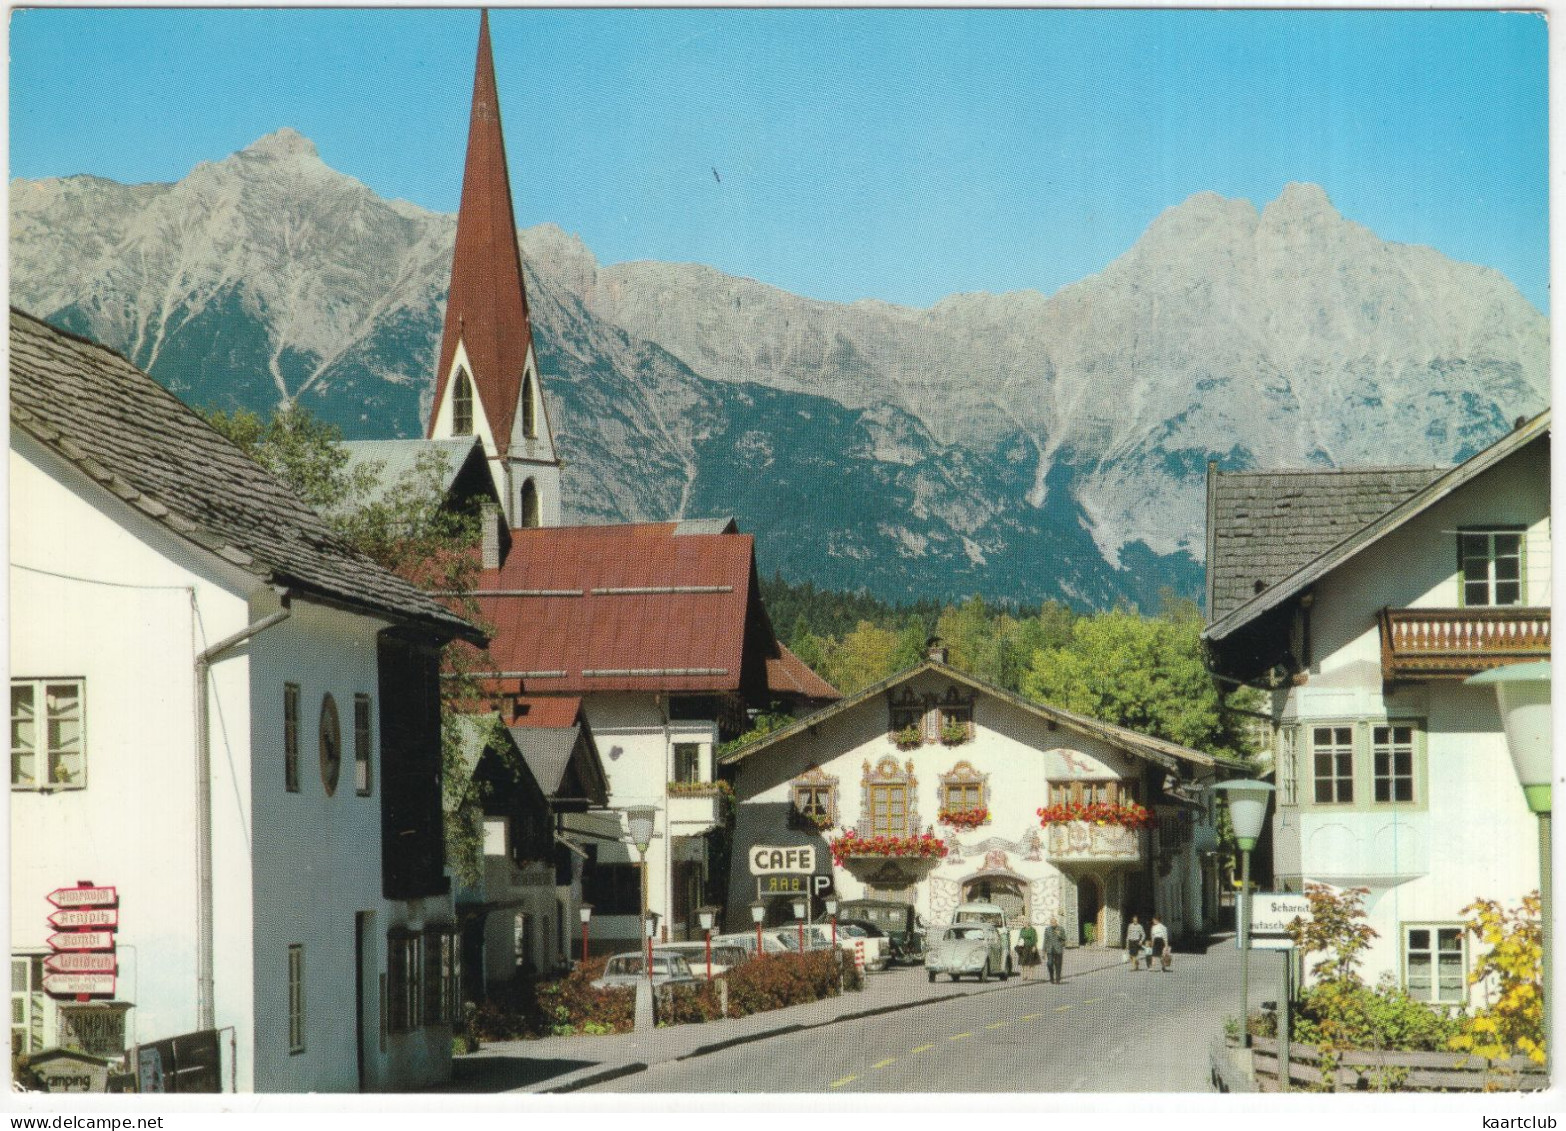 Seefeld In Tirol: LAND ROVER, VW 1200 KÄFER/COX, 'BULLI' BUS, PEUGEOT 404 - Café, Dorfstrasse - (Tirol, Austria) - Turismo